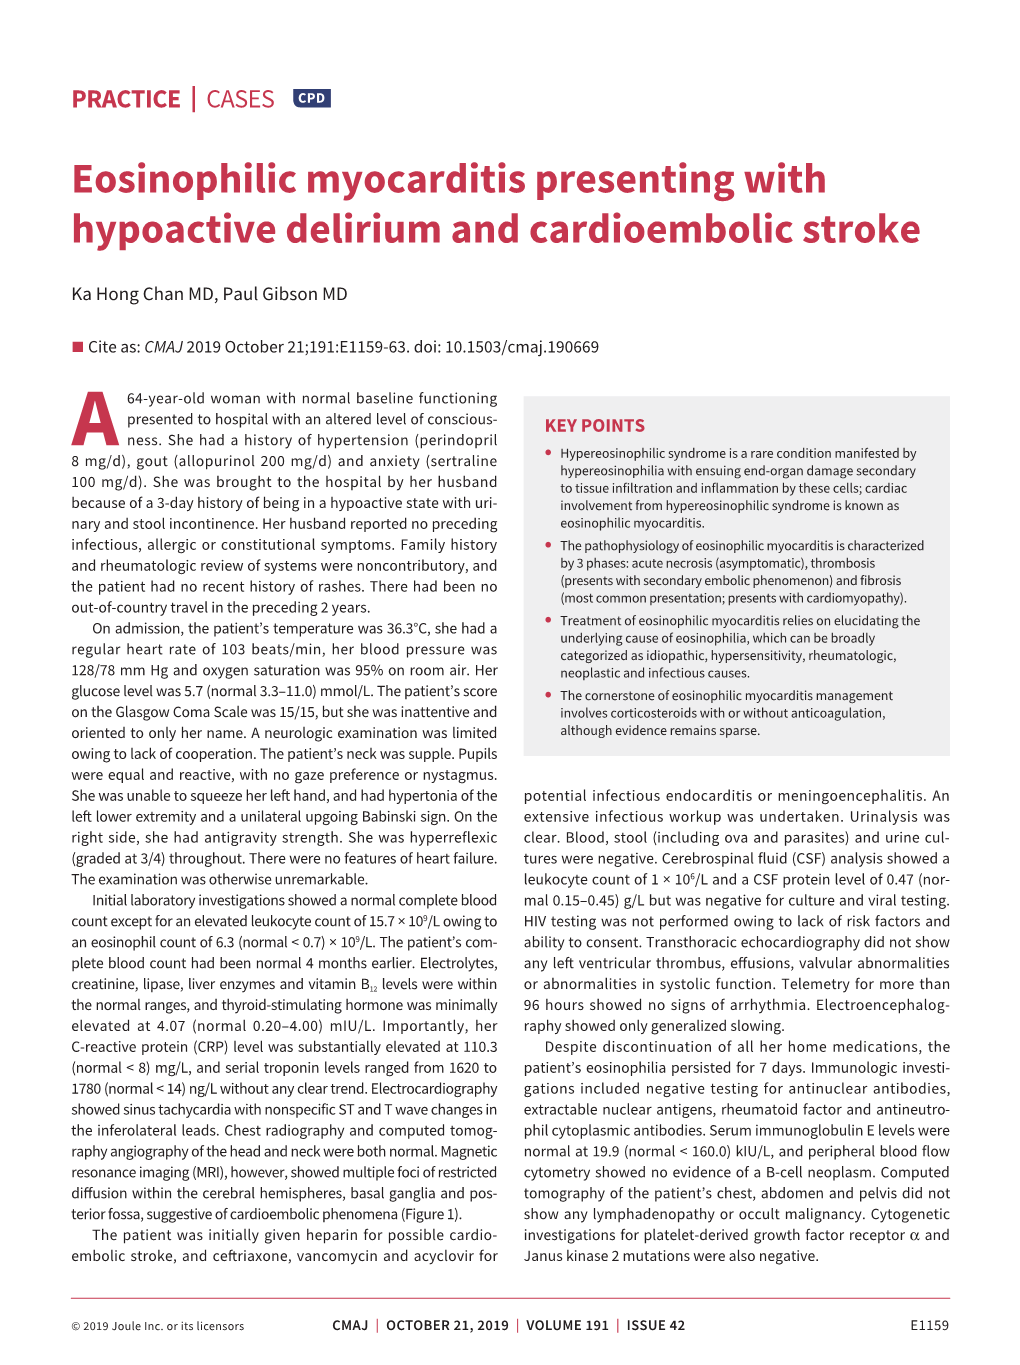 Eosinophilic Myocarditis Presenting with Hypoactive Delirium and Cardioembolic Stroke